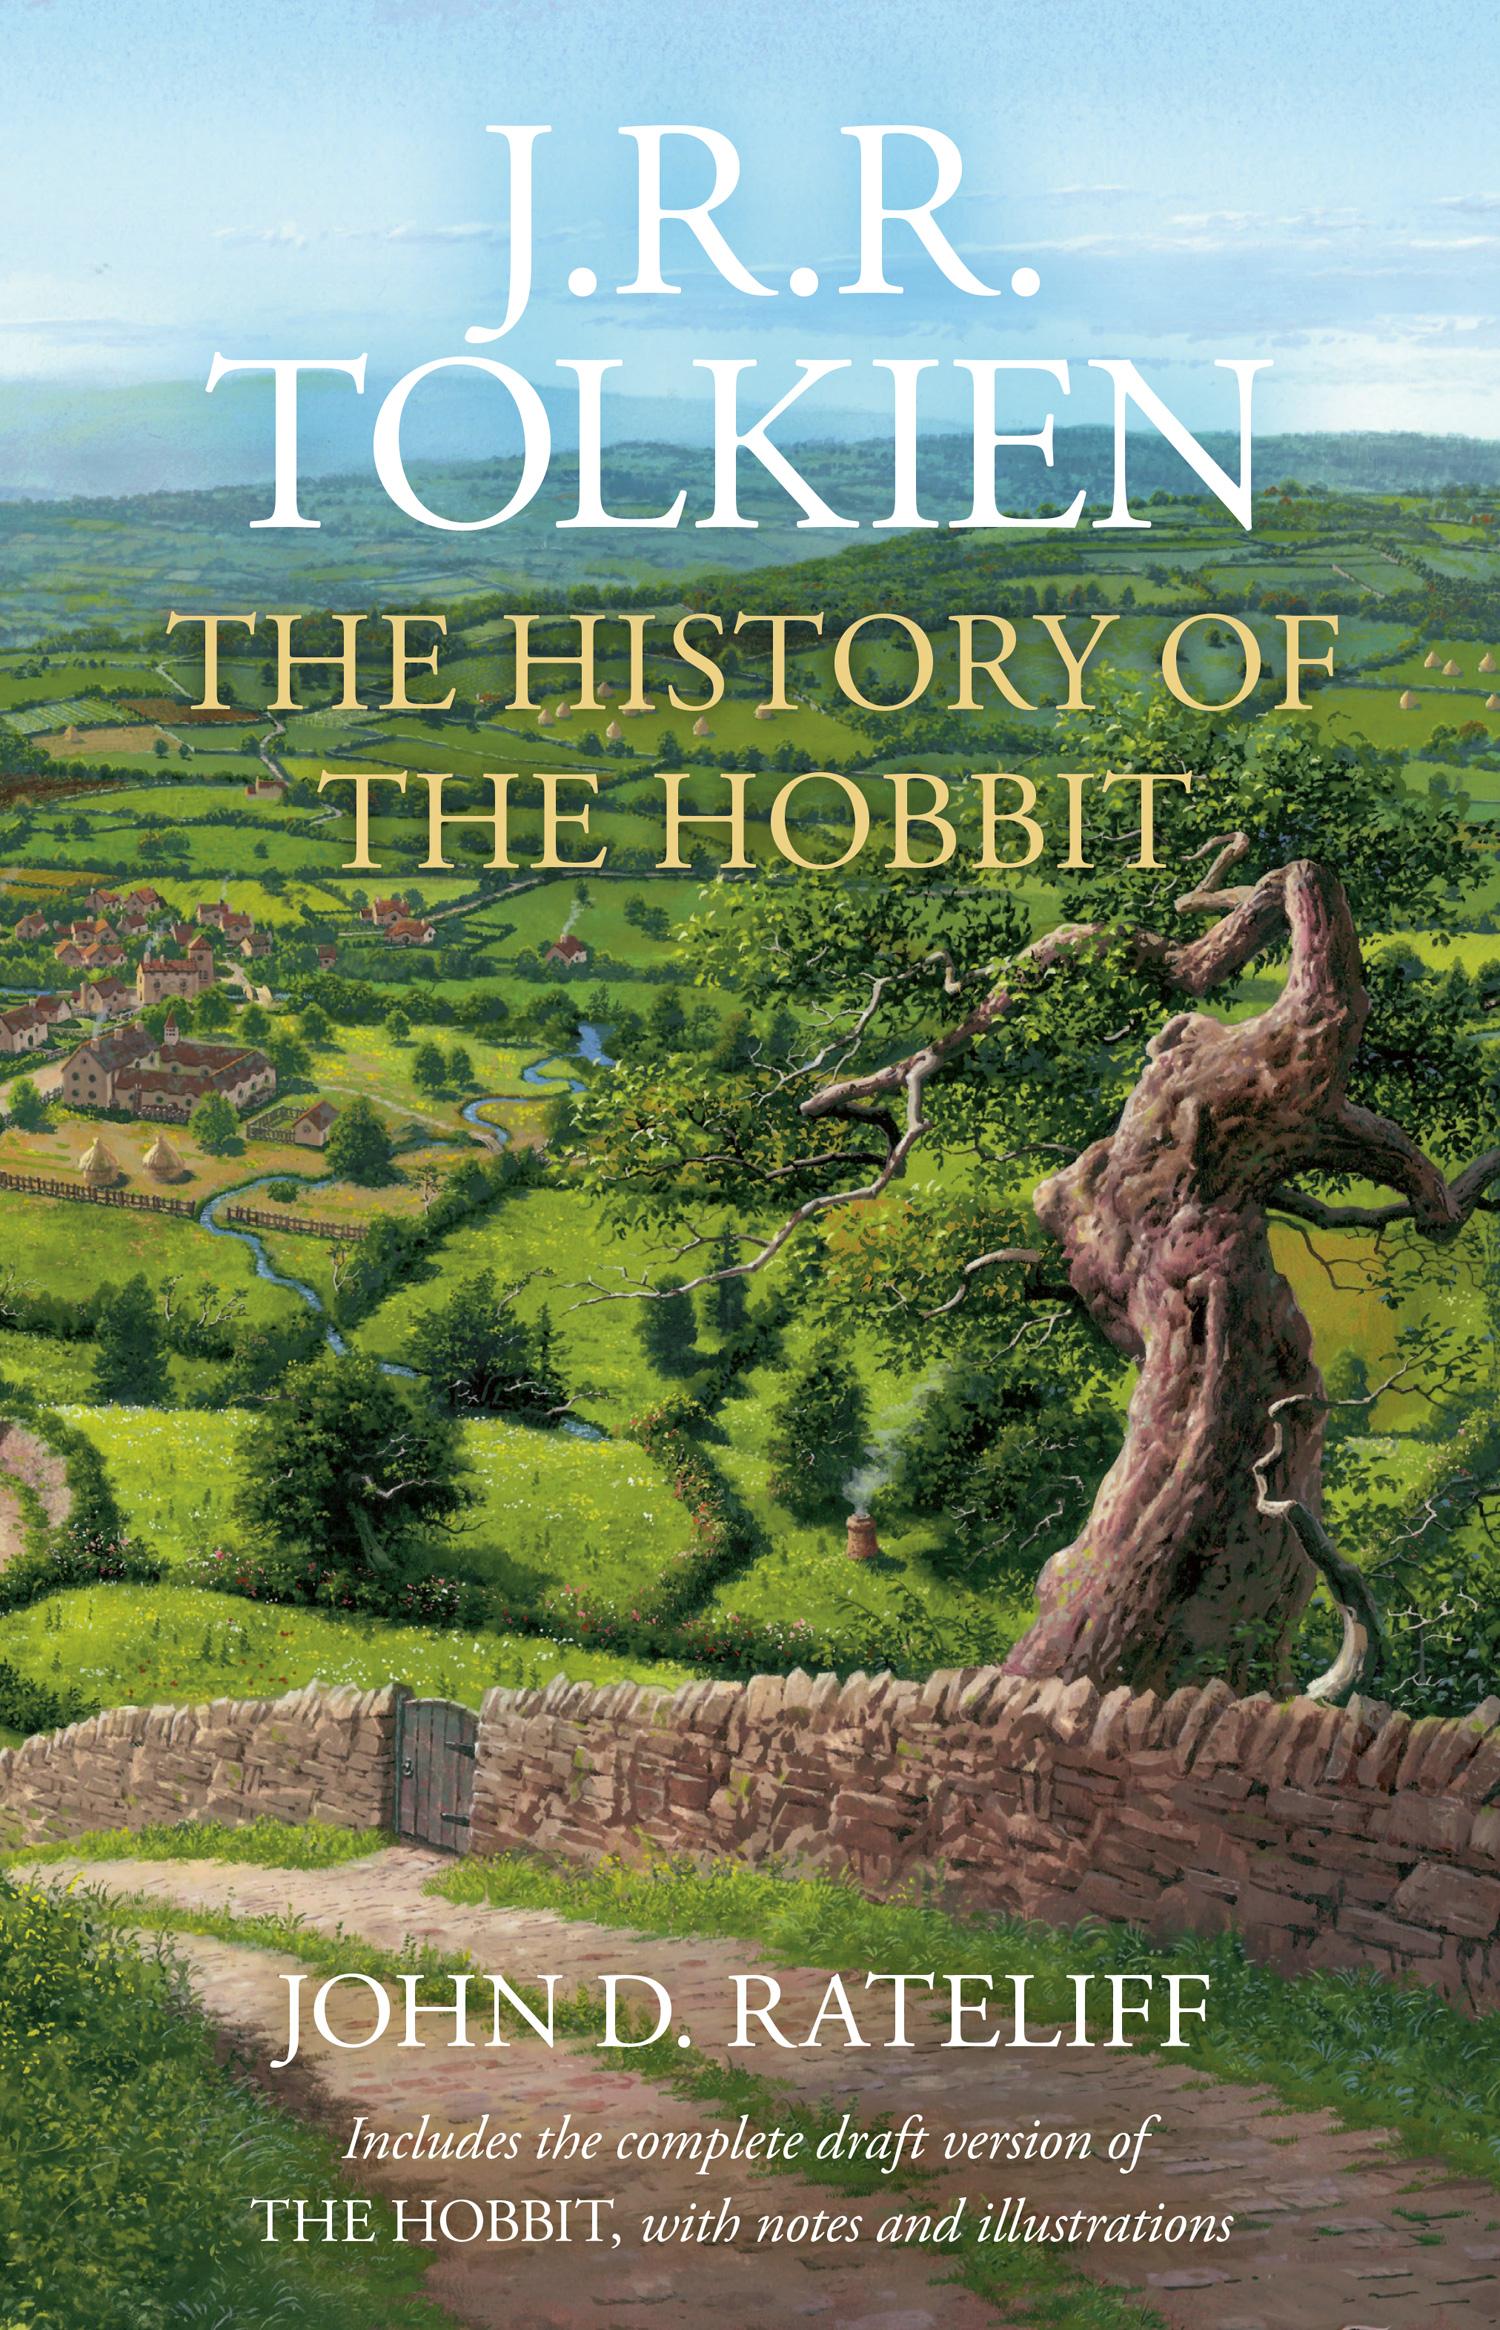 The History of the Hobbit / One Volume Edition / John Ronald Reuel Tolkien (u. a.) / Buch / Lesebändchen / XLII / Englisch / 2011 / Harper Collins Publ. UK / EAN 9780007440825 - Tolkien, John Ronald Reuel